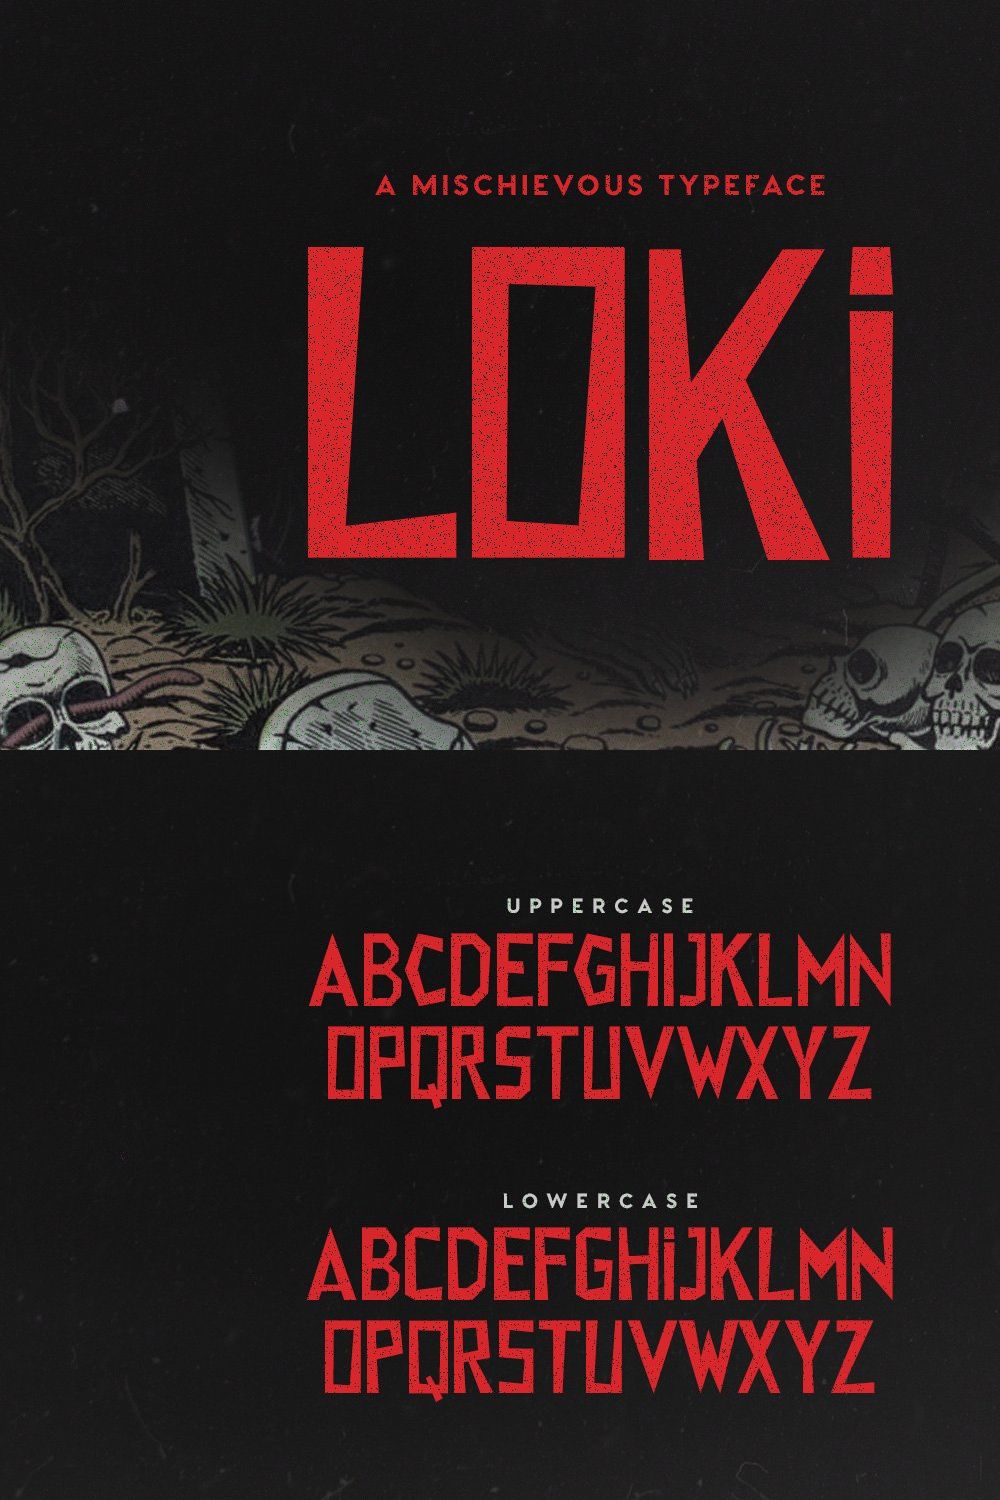 Loki Typeface pinterest preview image.